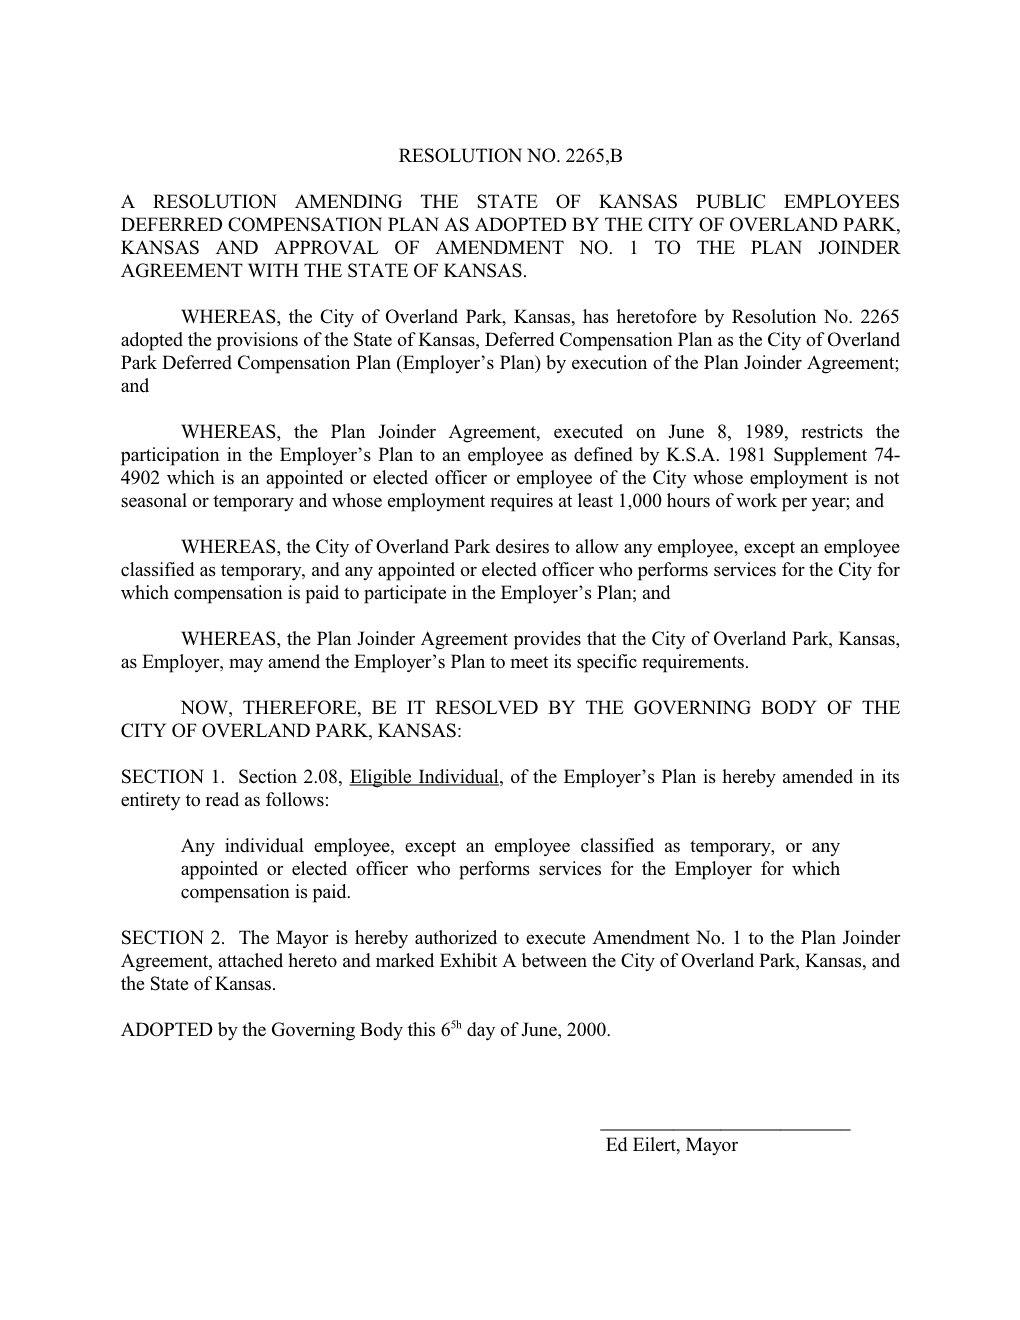 Deferred Compensation Plan, State of Kansas (Aetna) - Resolution No. 2265B - June 5, 1989